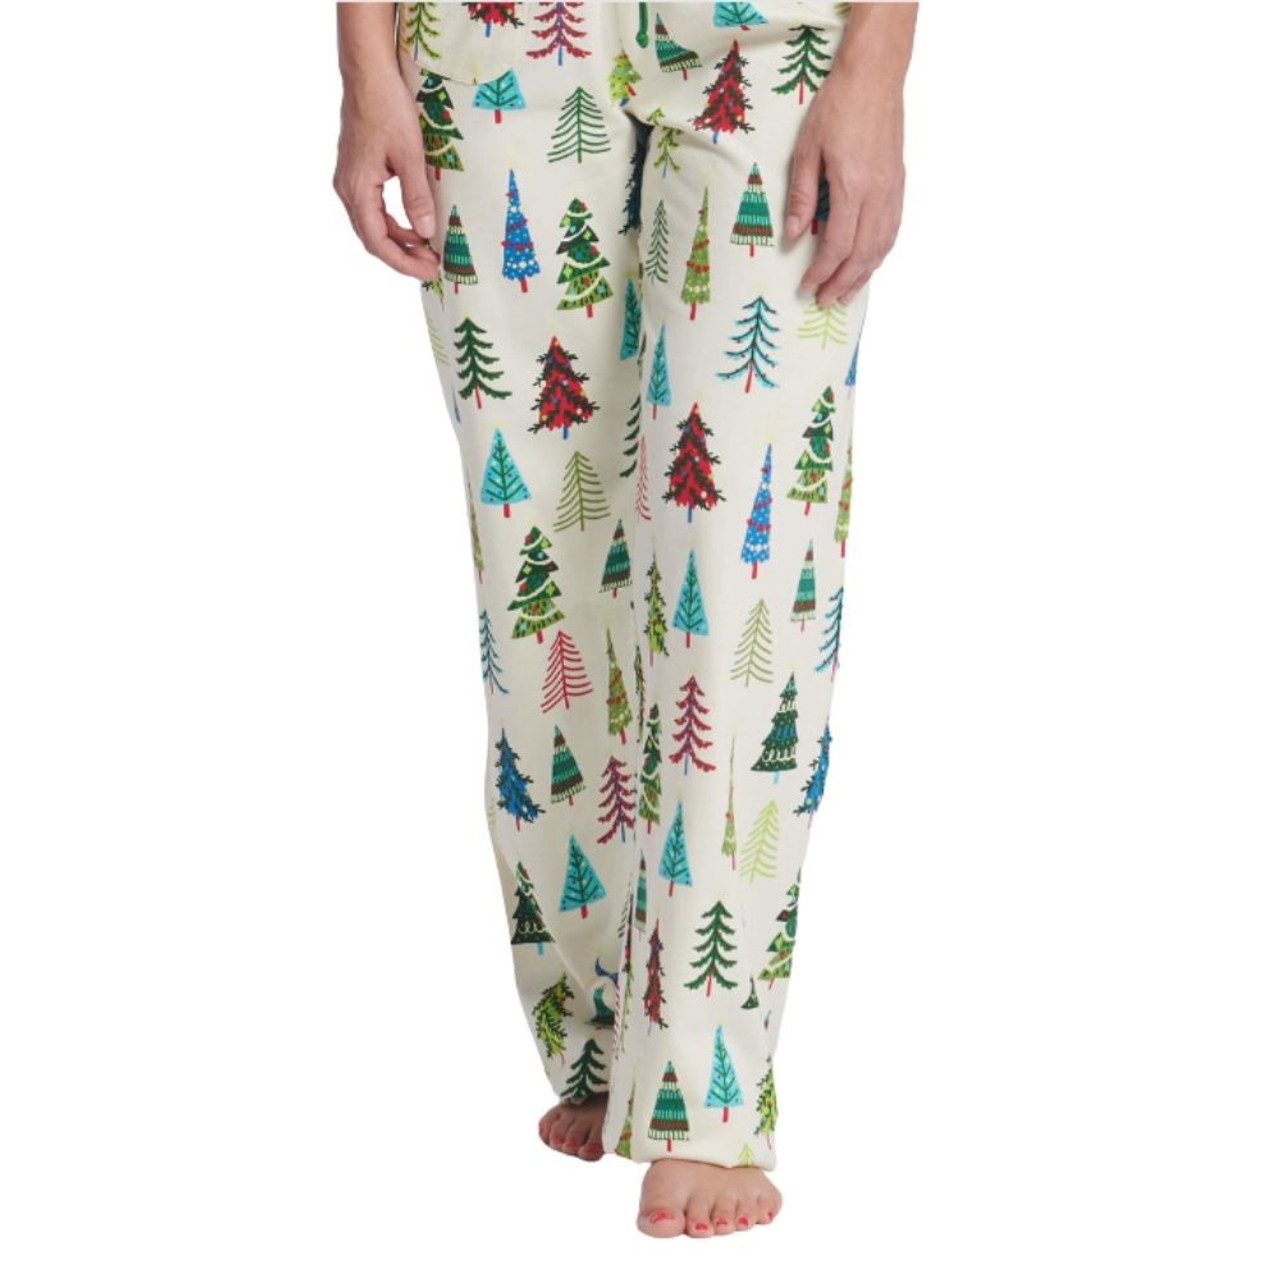 Women's Christmas Trees Jersey Pajama Pants by Hatley